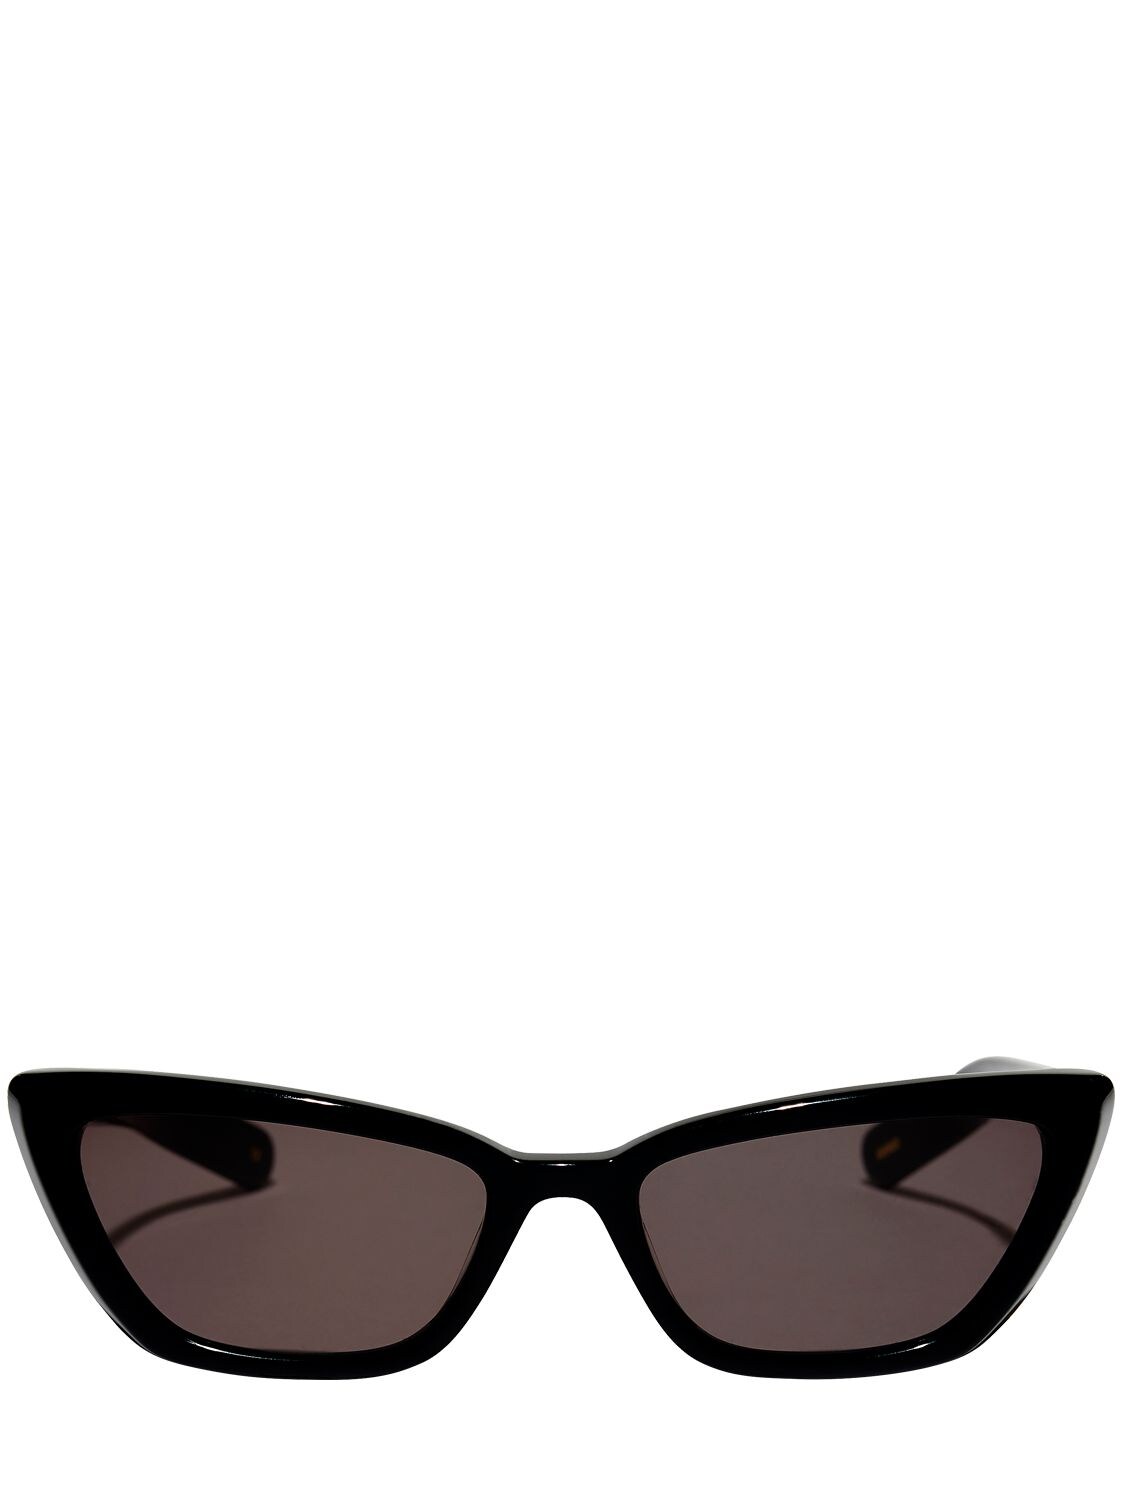 Flatlist Eyewear Fast Forward Acetate Sunglasses In Black